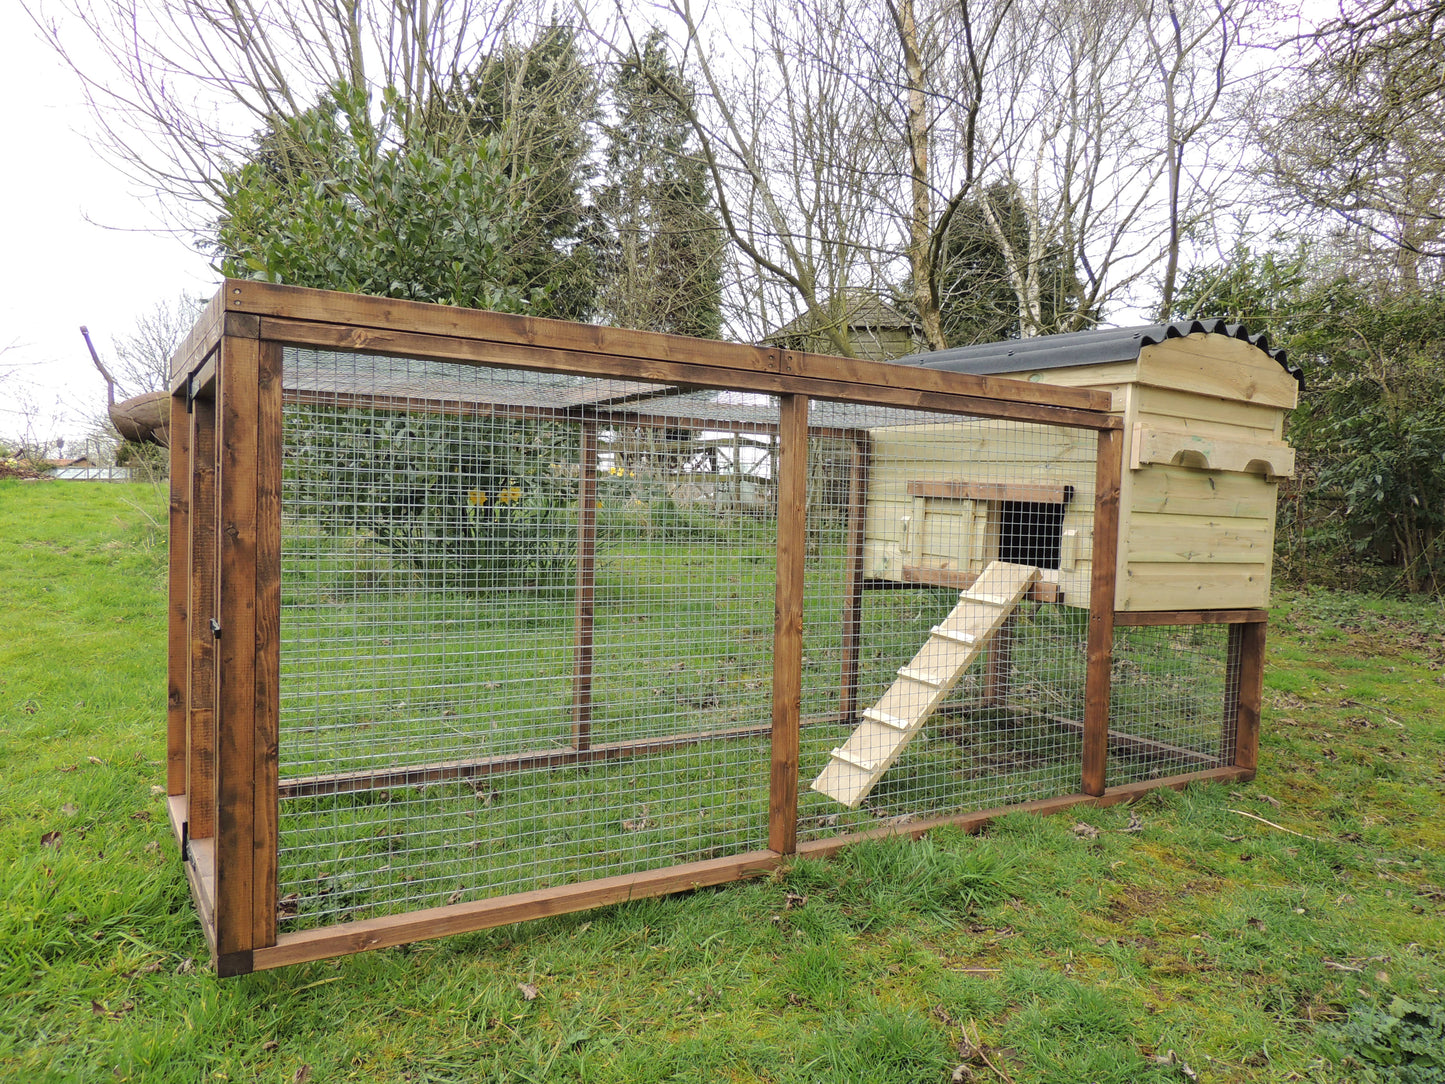 The Brecon Poultry Unit